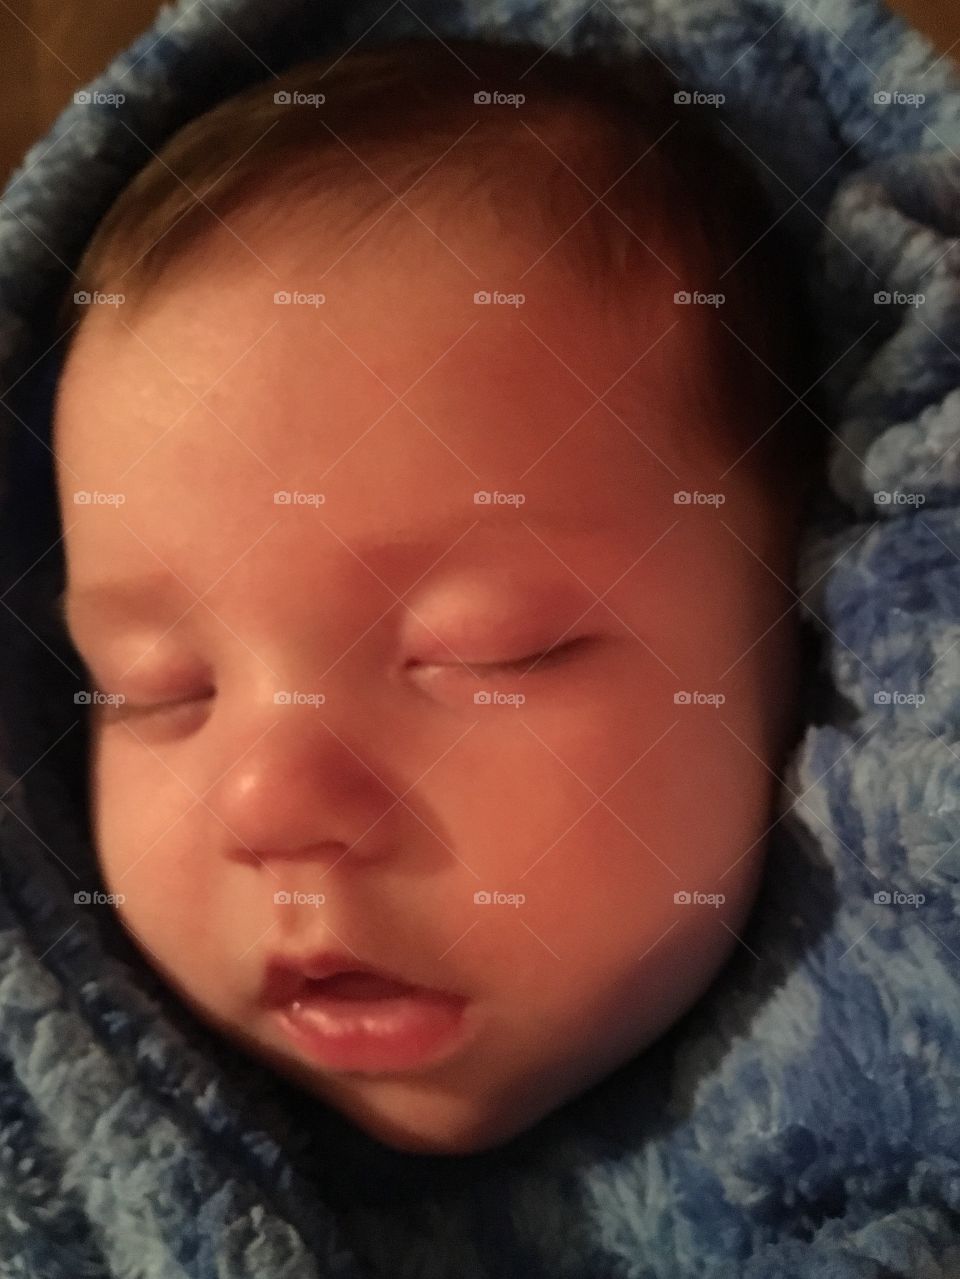 My grandson sleeping 